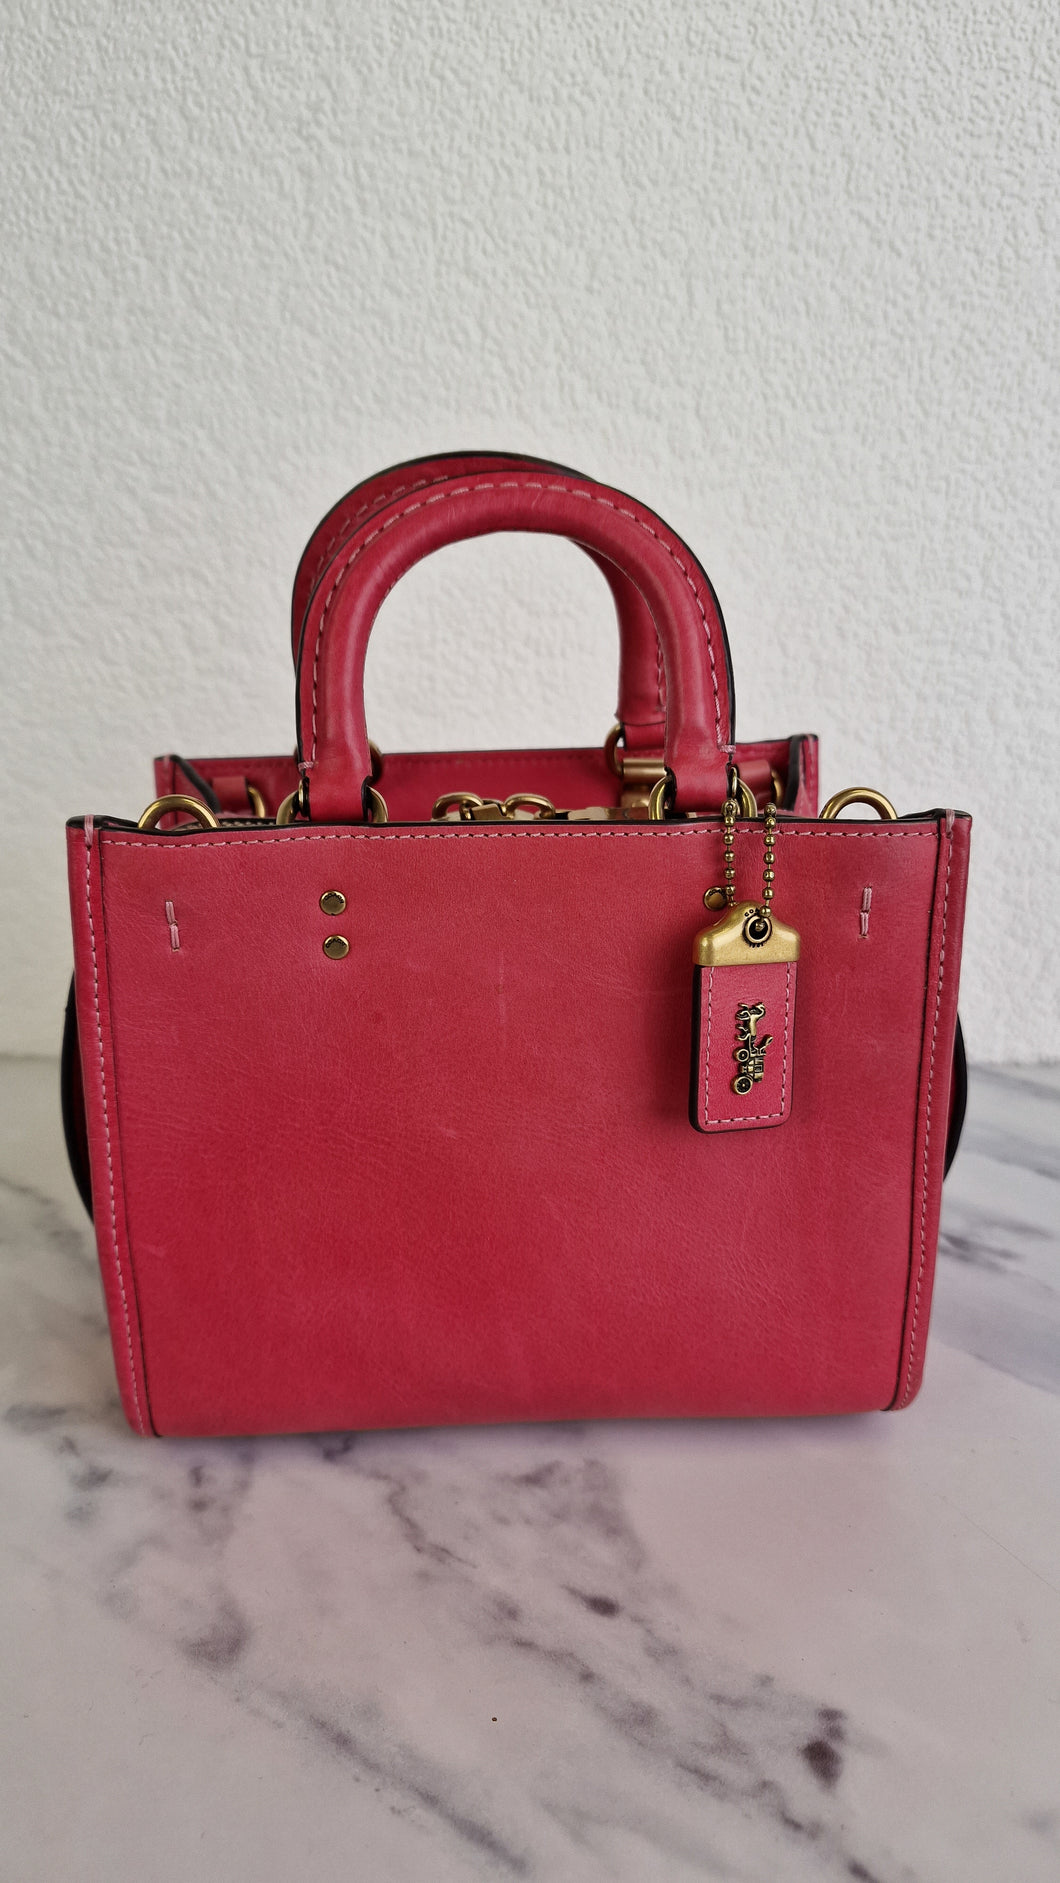 Coach 1941 Rogue 17 in Bright Carmine Red Pink Original Natural Leather - Handbag Mini Bag Crossbody Bag - Coach C3870